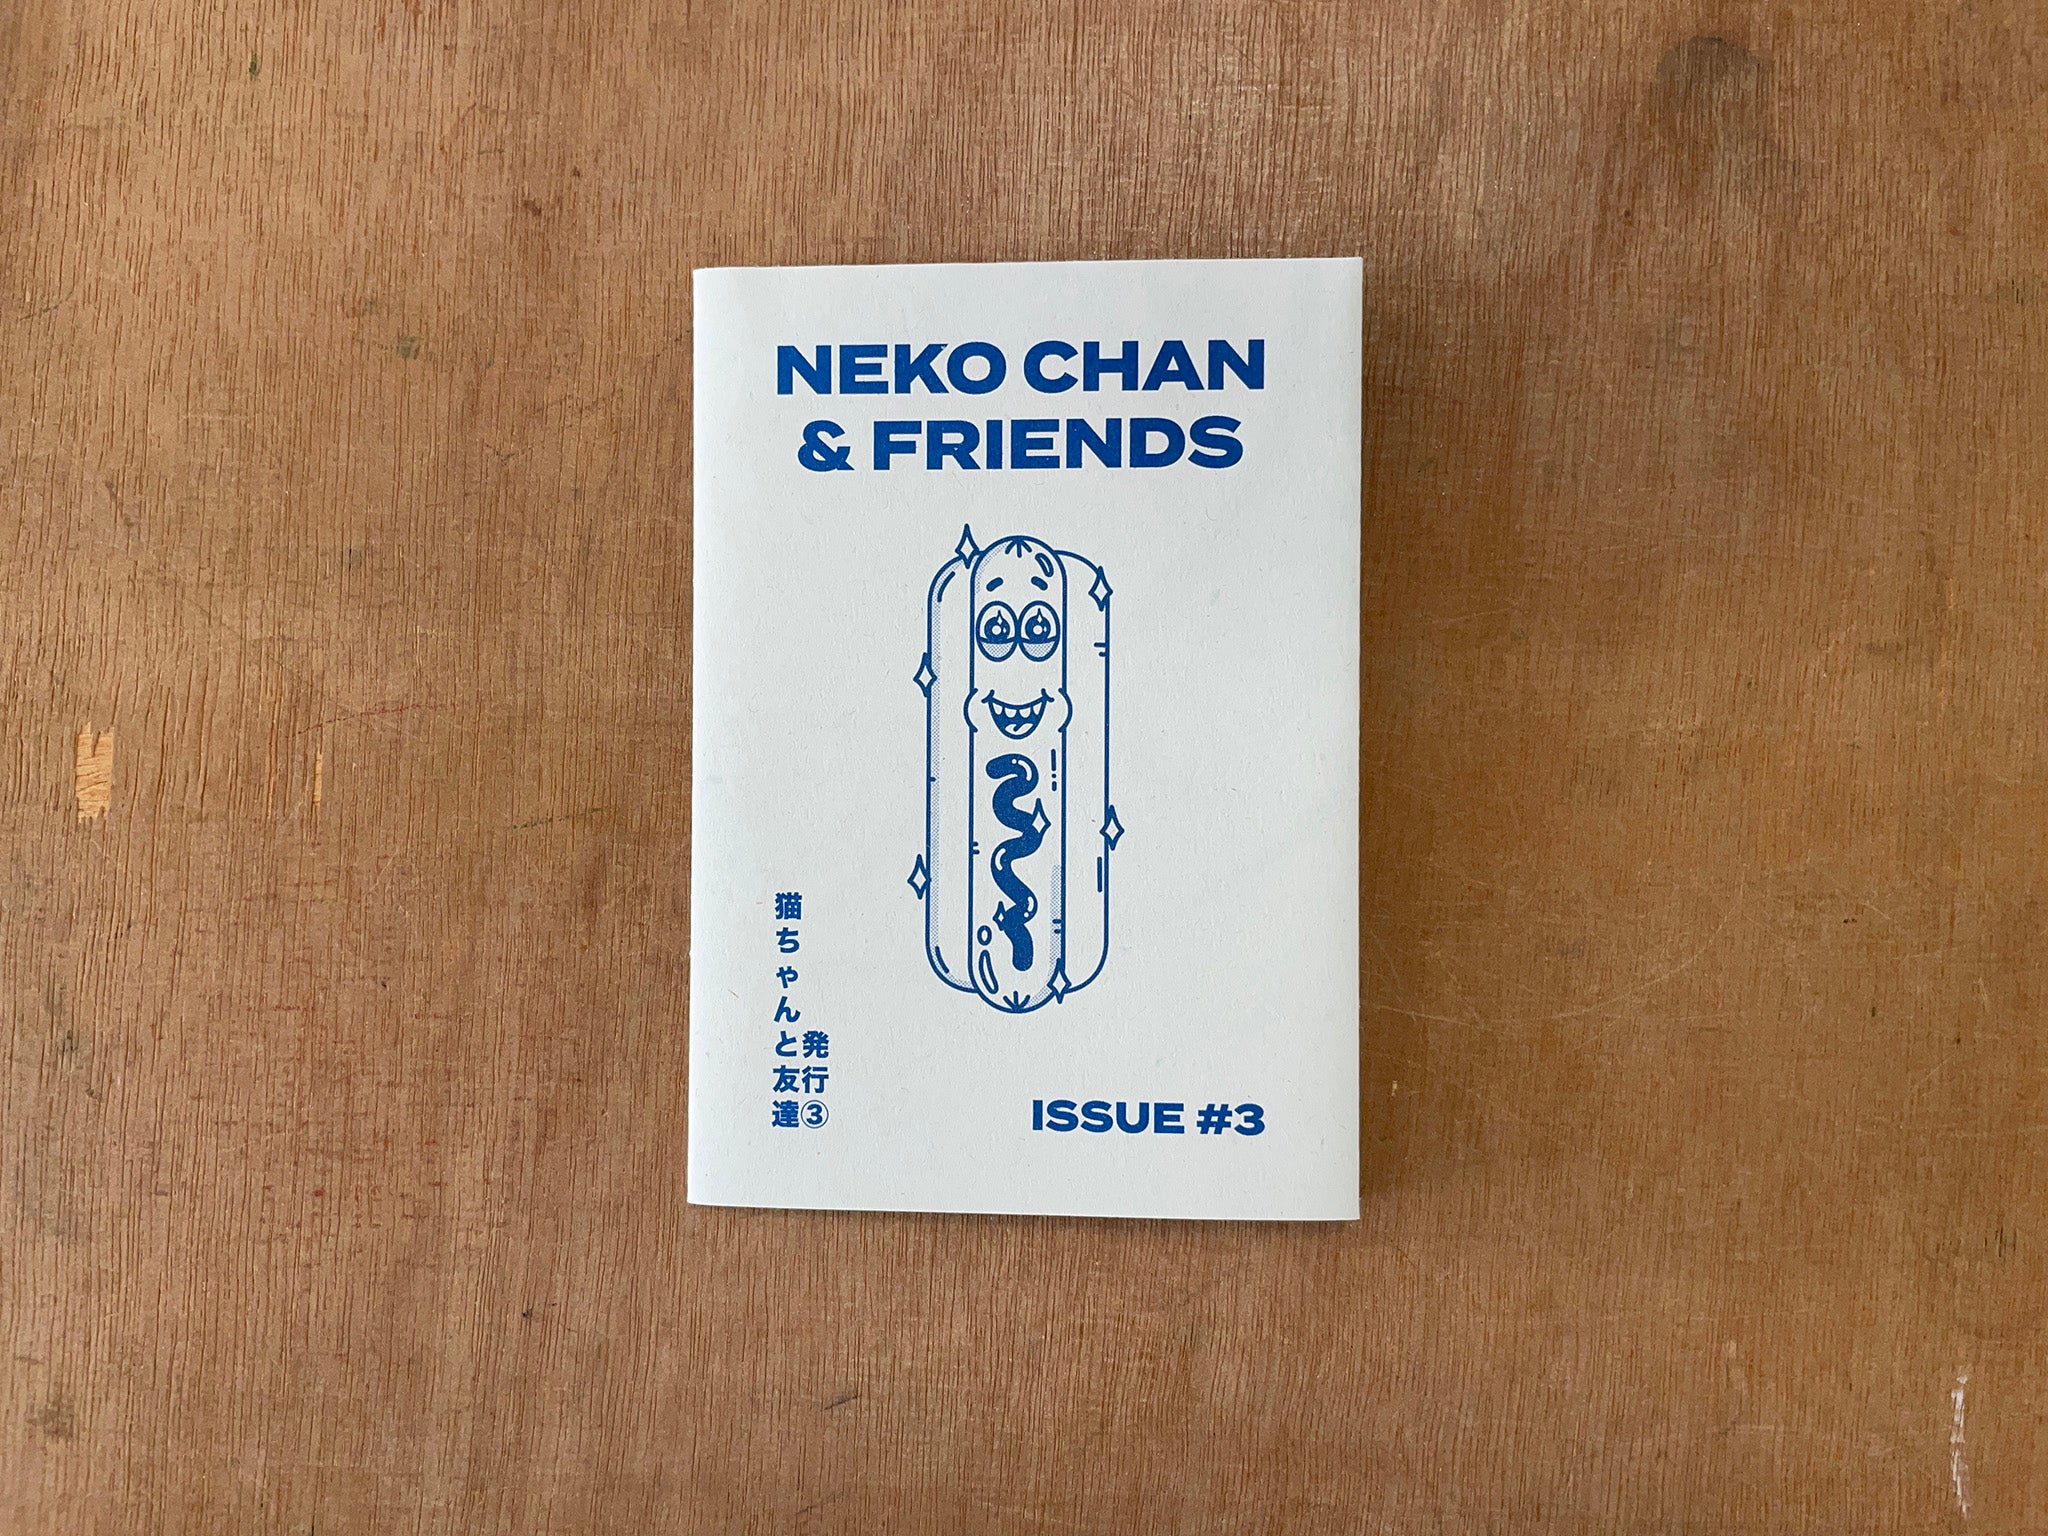 NEKO CHAN & FRIENDS ISSUE #3 by Hannah Killoh